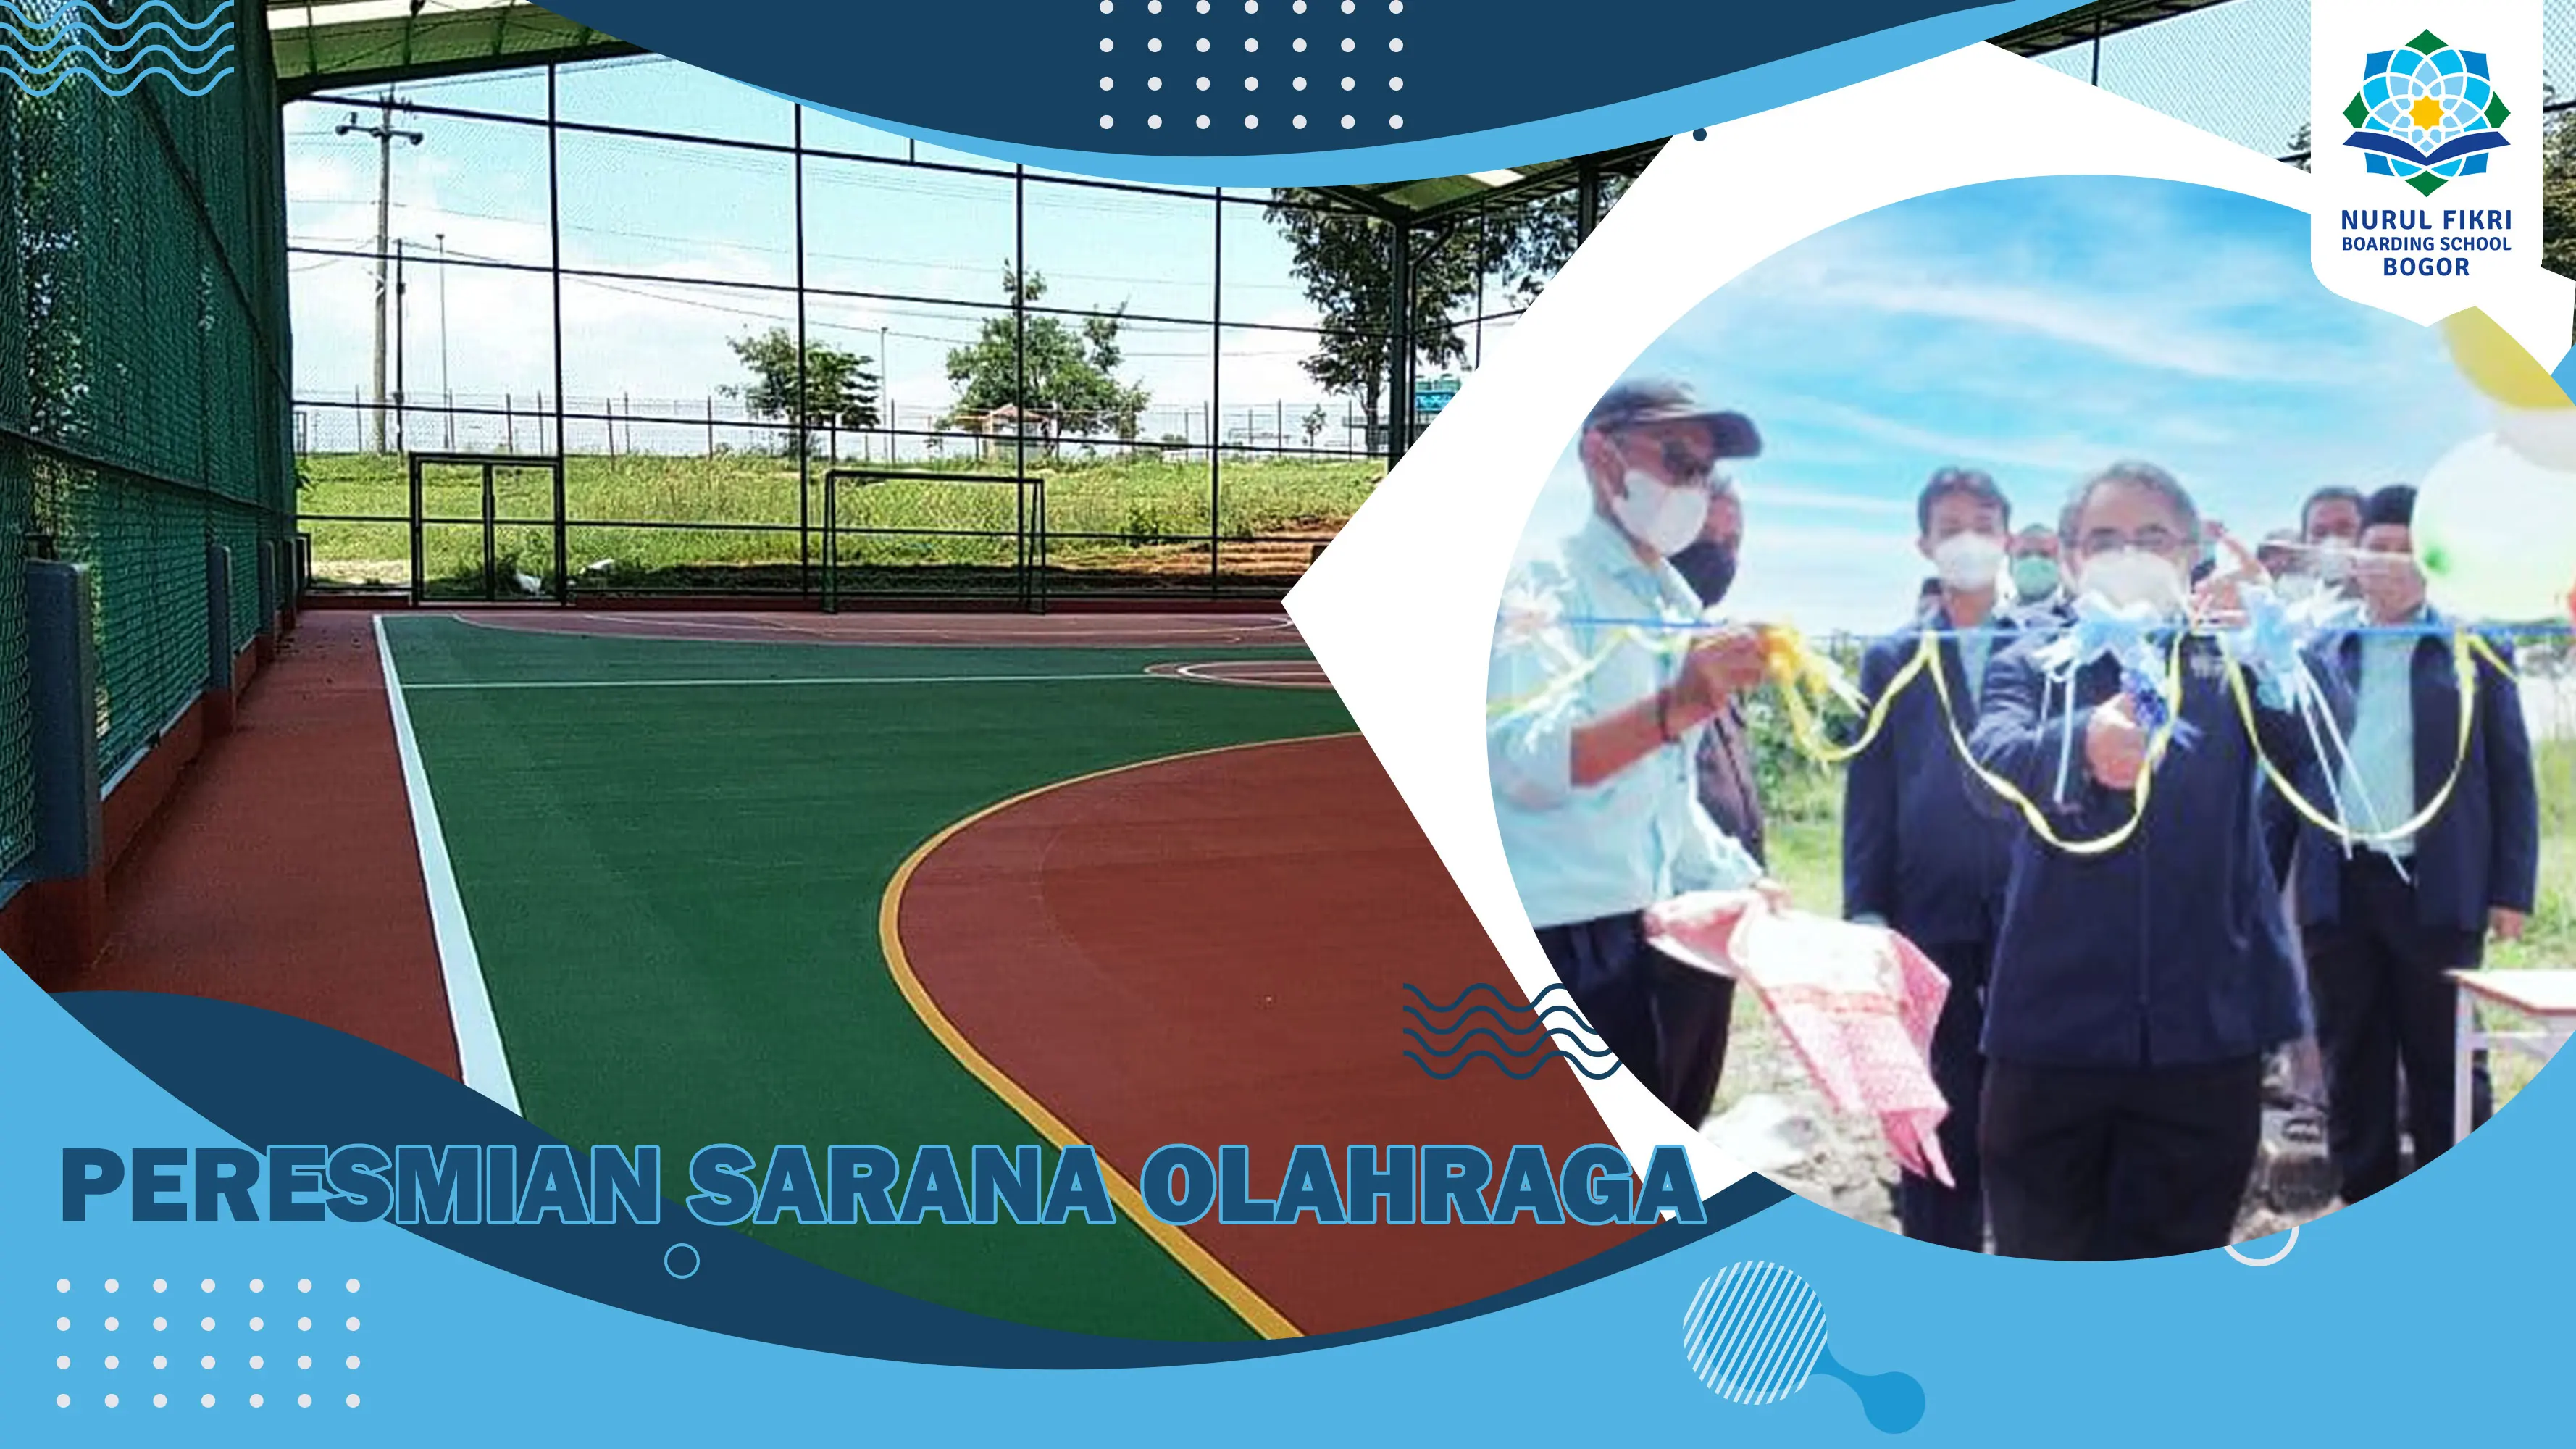 Peresmian Sarana Olahraga (Lapangan Futsal, Basket) Nurul Fikri Boarding School Bogor